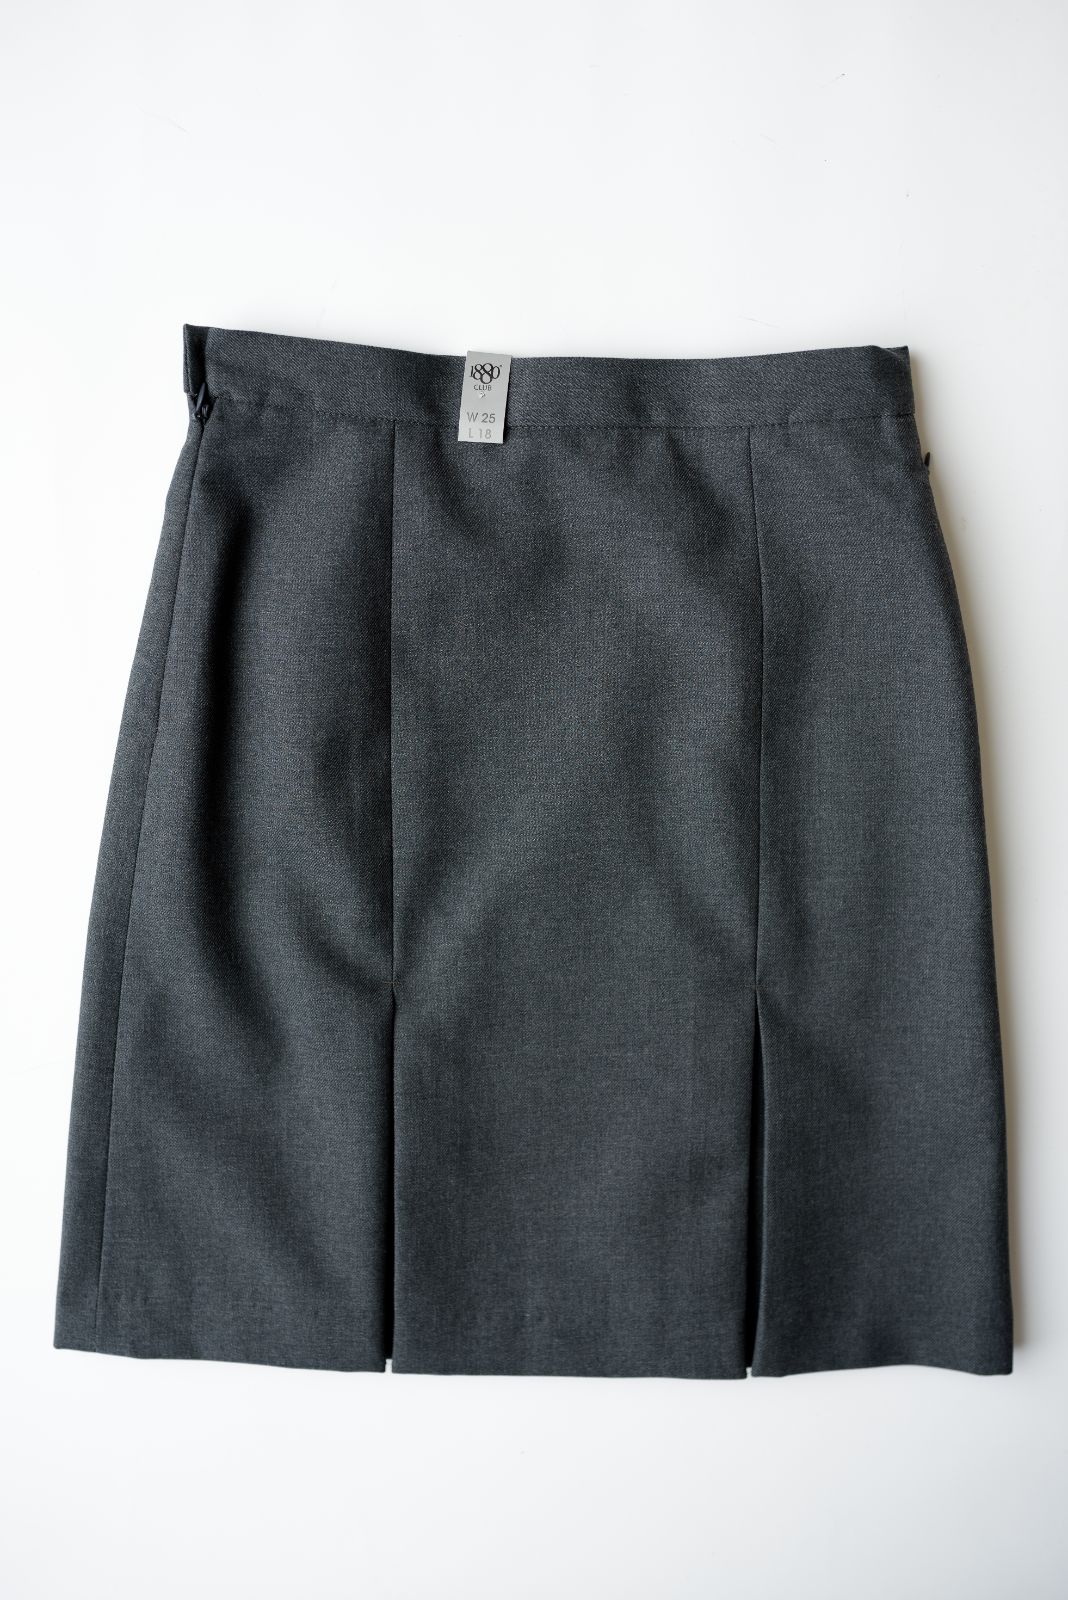 1880 Club back of grey pleat school skirt